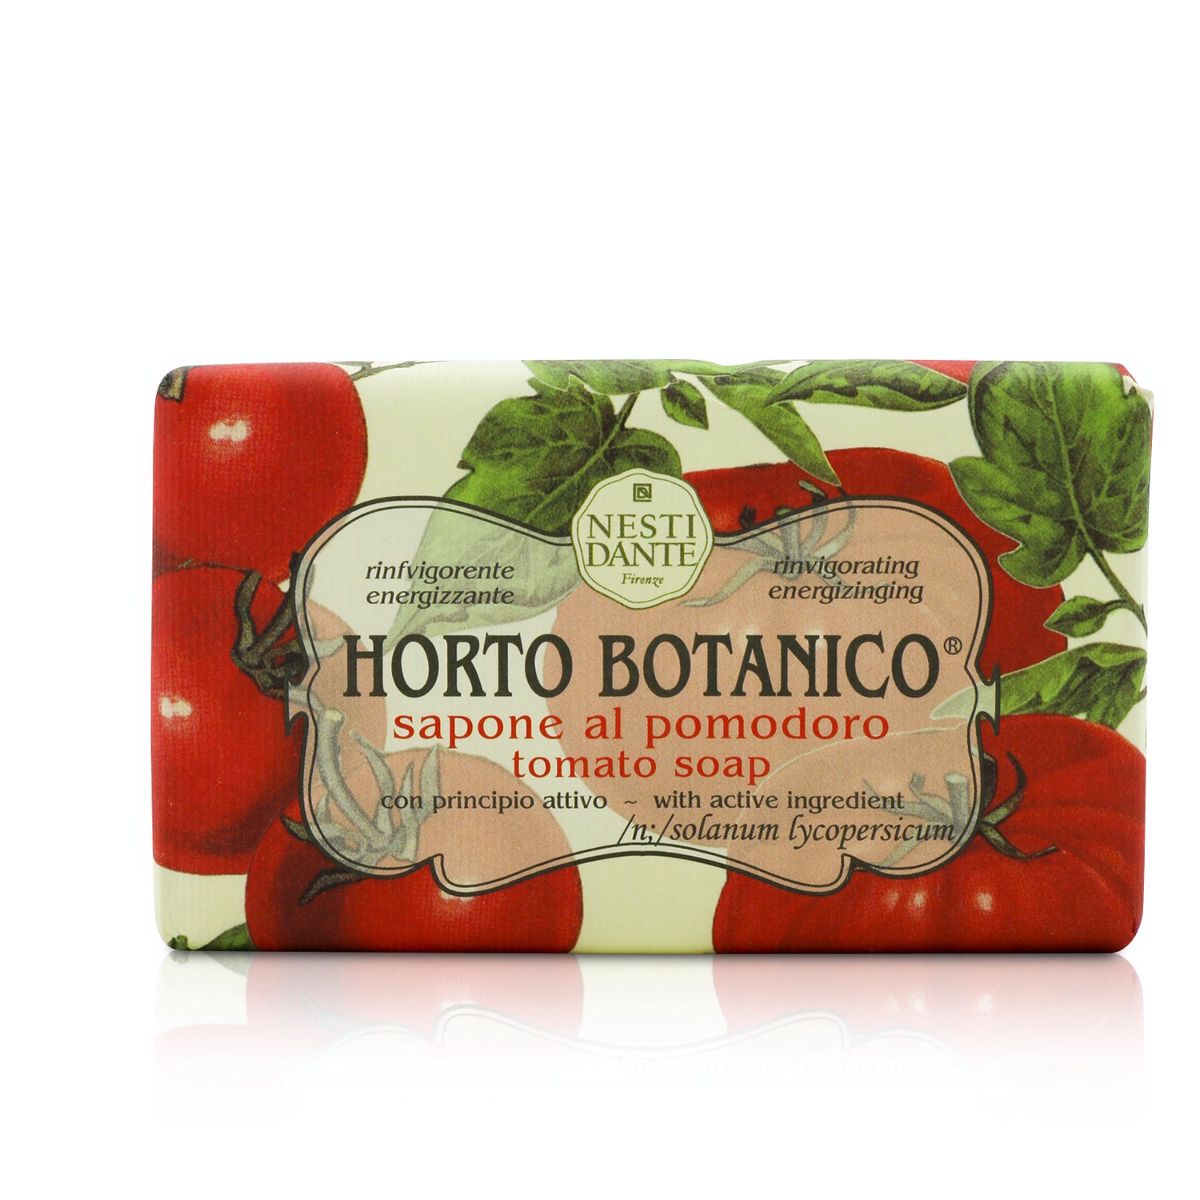 IHorto Botanico Tomato Soap Nesti Dante Image